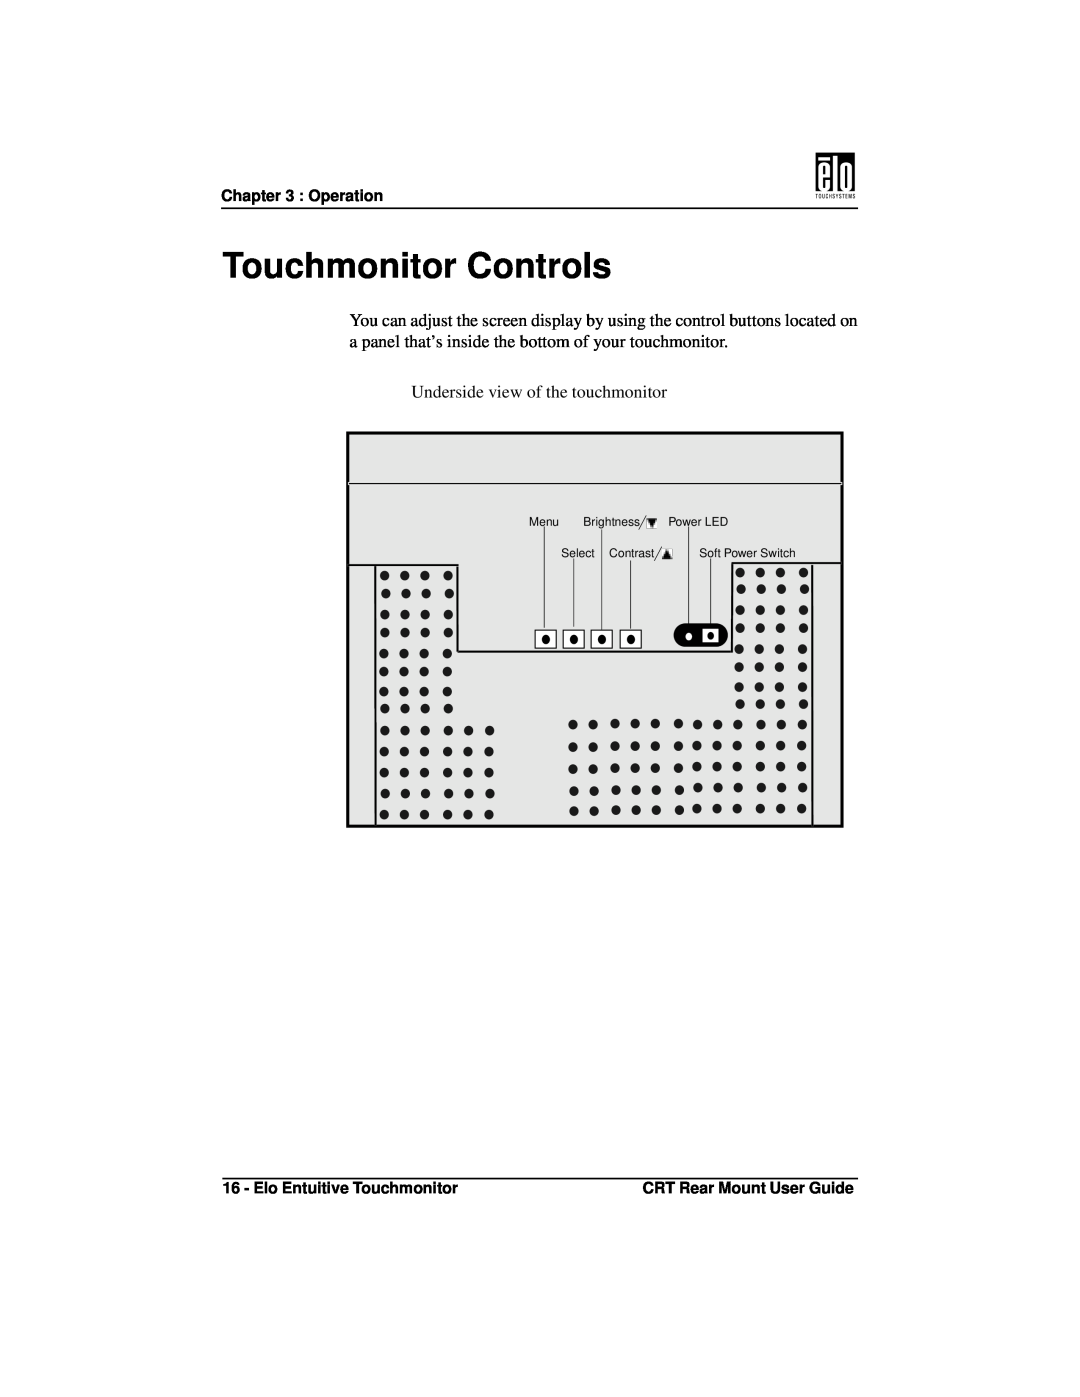 Elo TouchSystems ET1745C, ET1545C Touchmonitor Controls, Menu, Brightness, Power LED, Select, Contrast, Soft Power Switch 